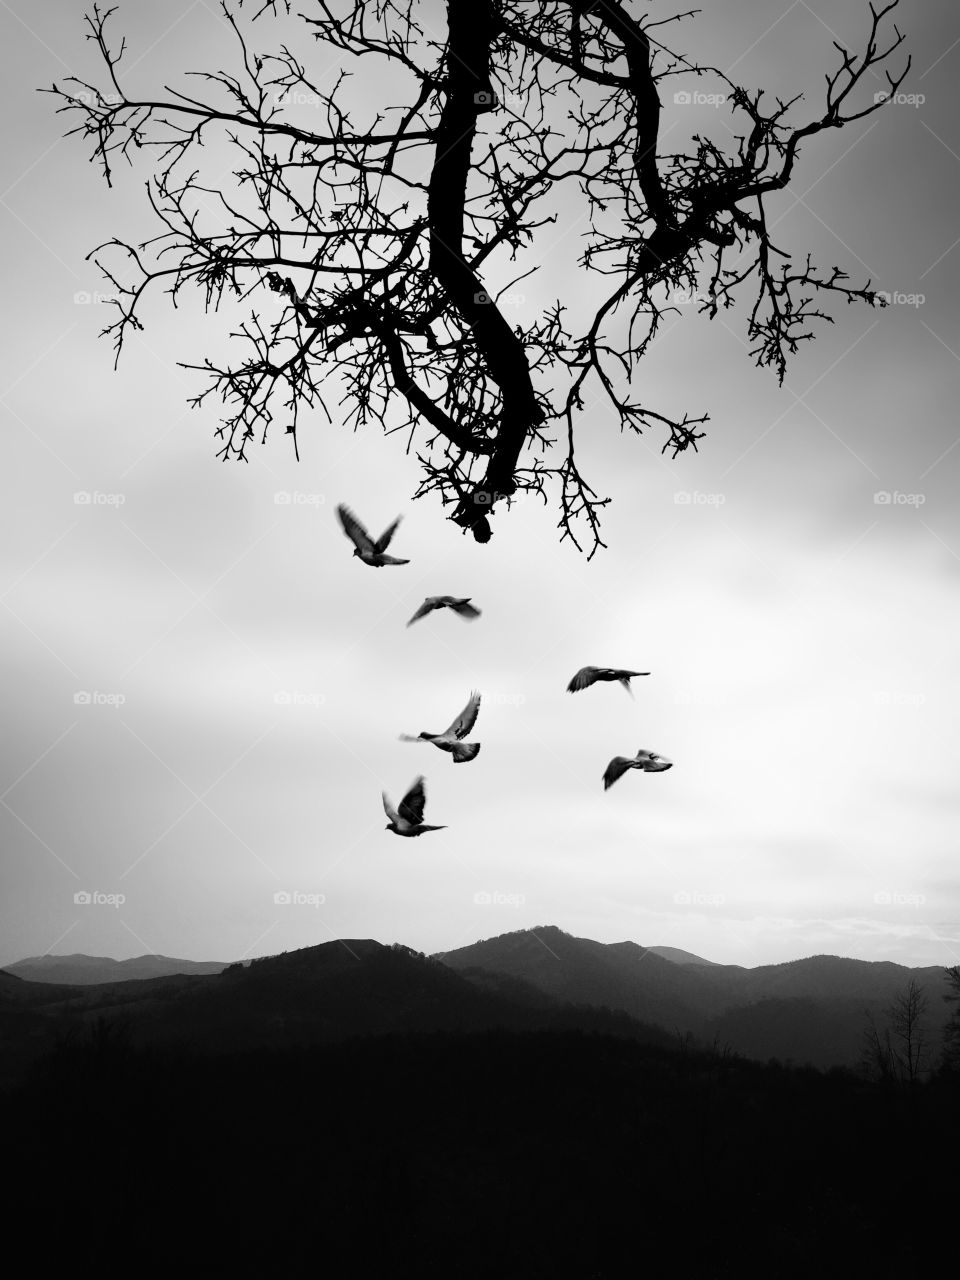 Black & white shot of mountains , tree branch & birds flying away .